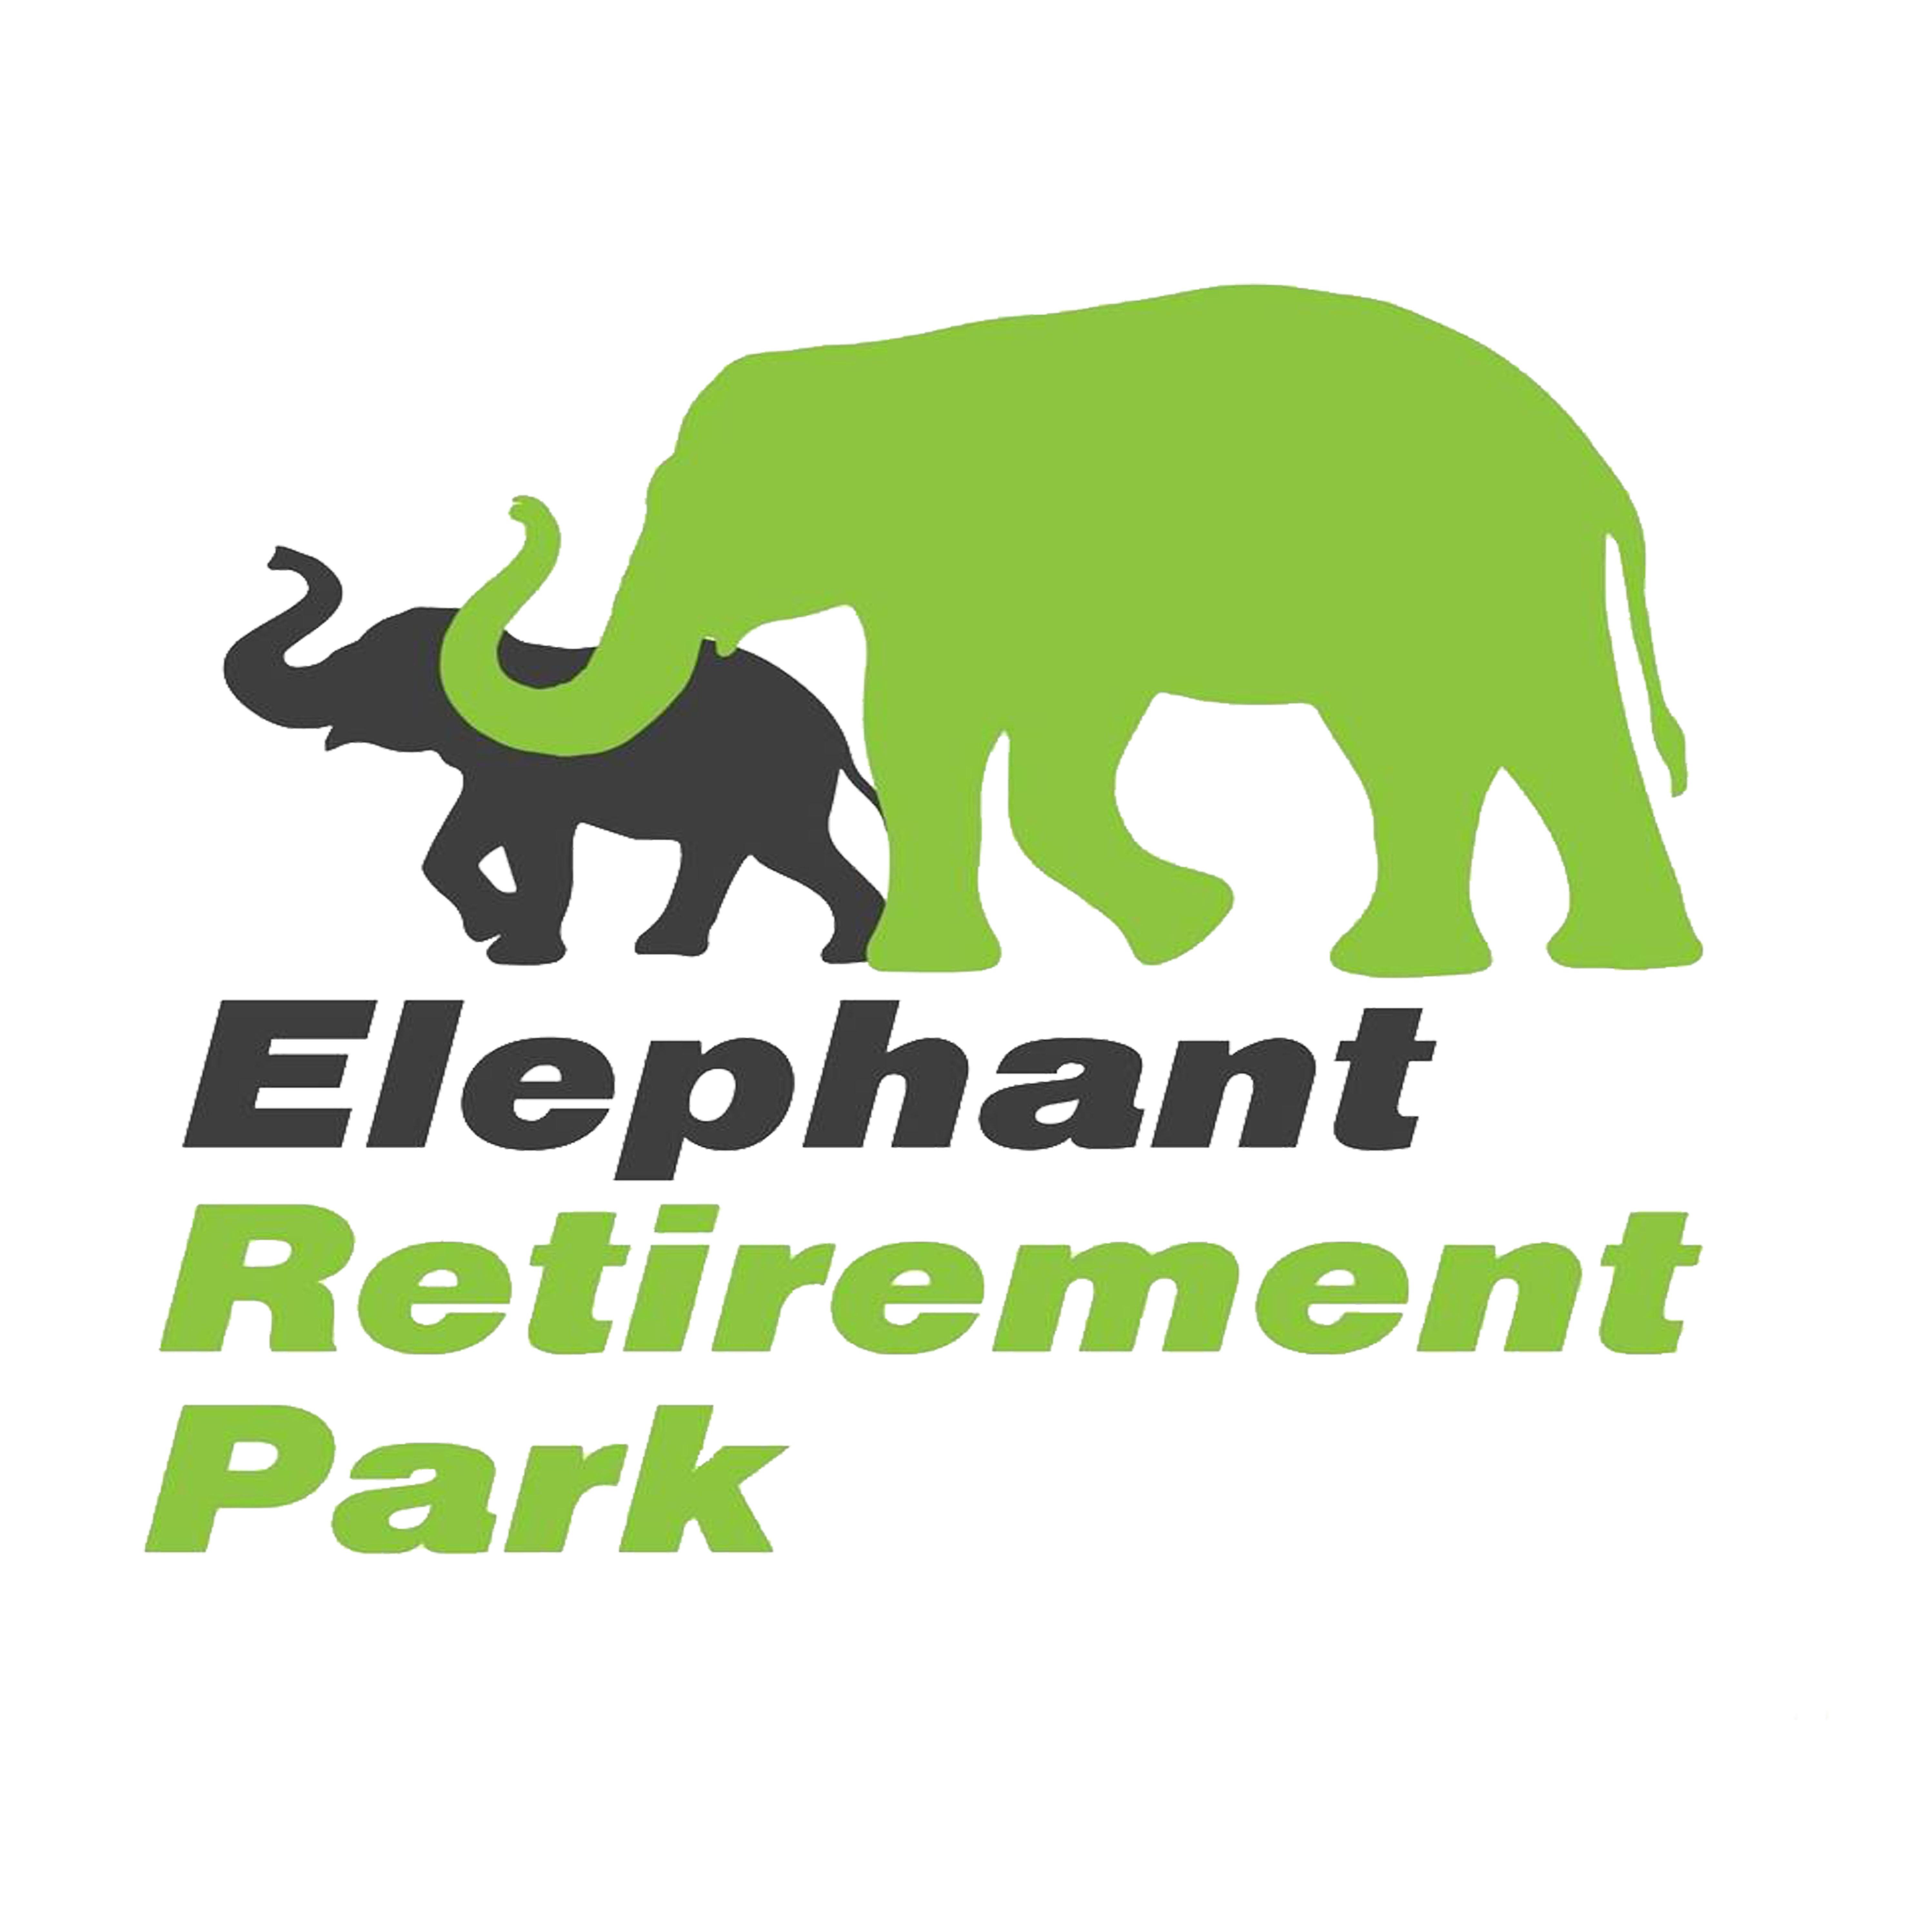 Elephant retirement park